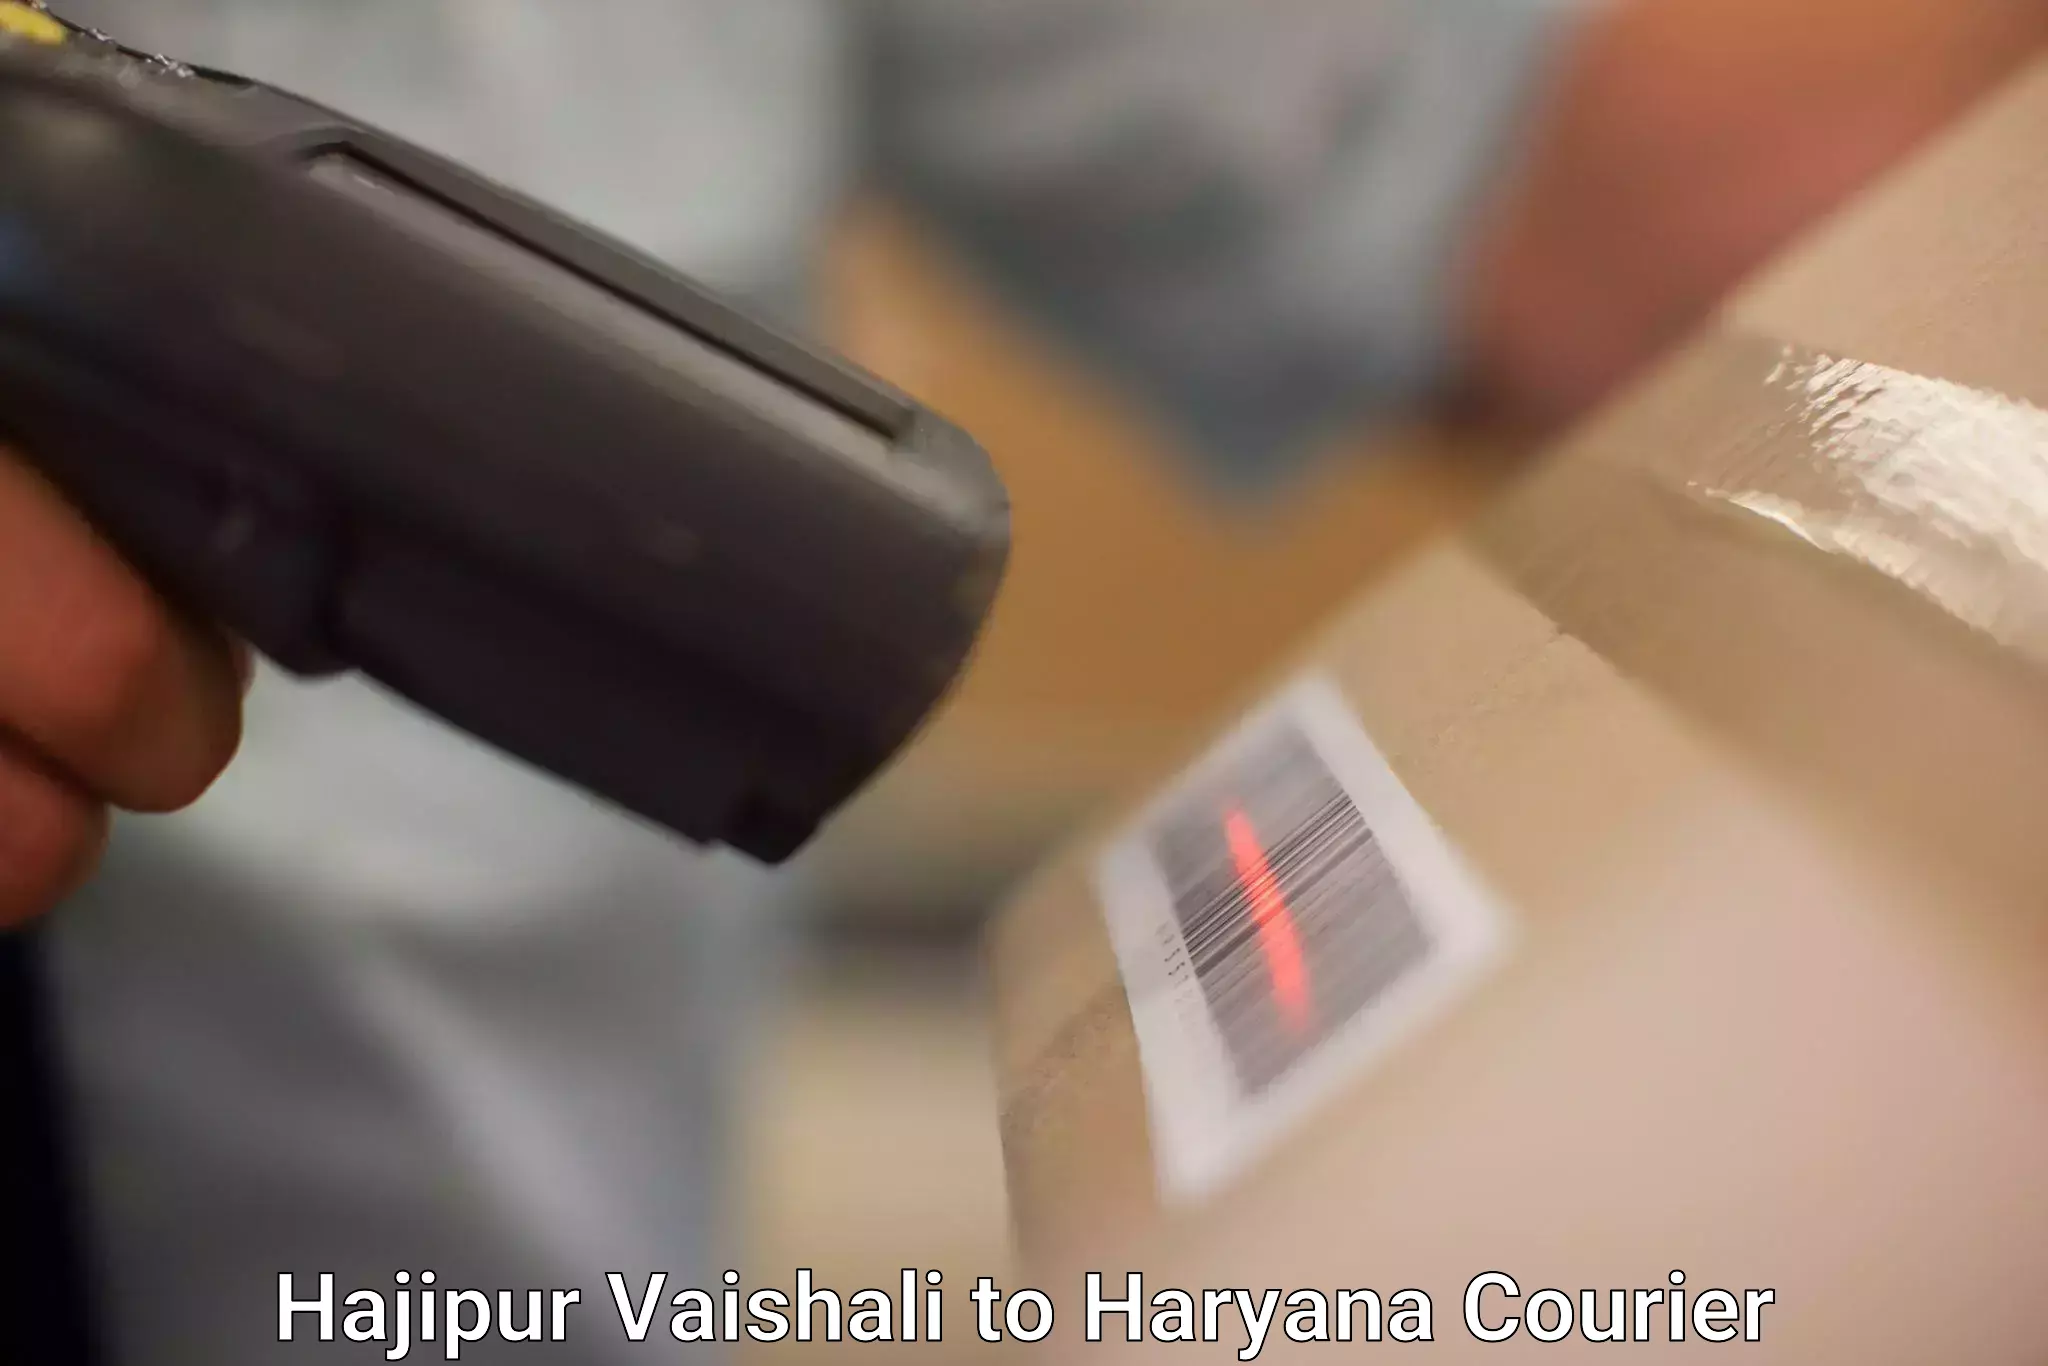 Overnight delivery services Hajipur Vaishali to Bilaspur Haryana